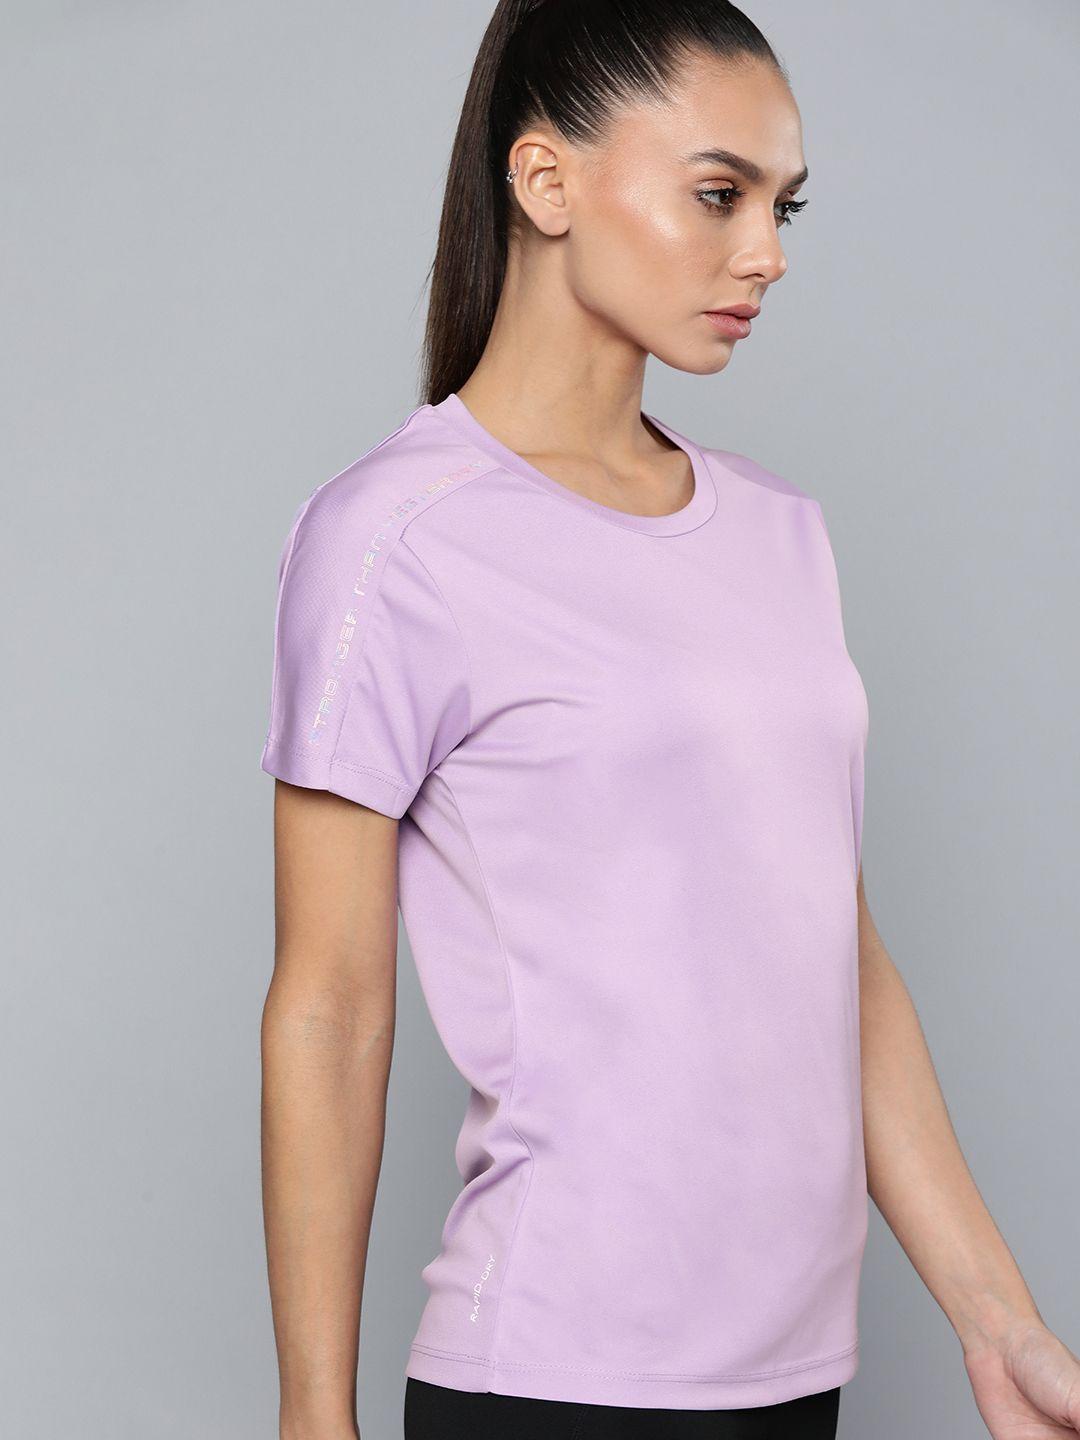 hrx by hrithik roshan training women digital lavender rapid-dry solid tshirts